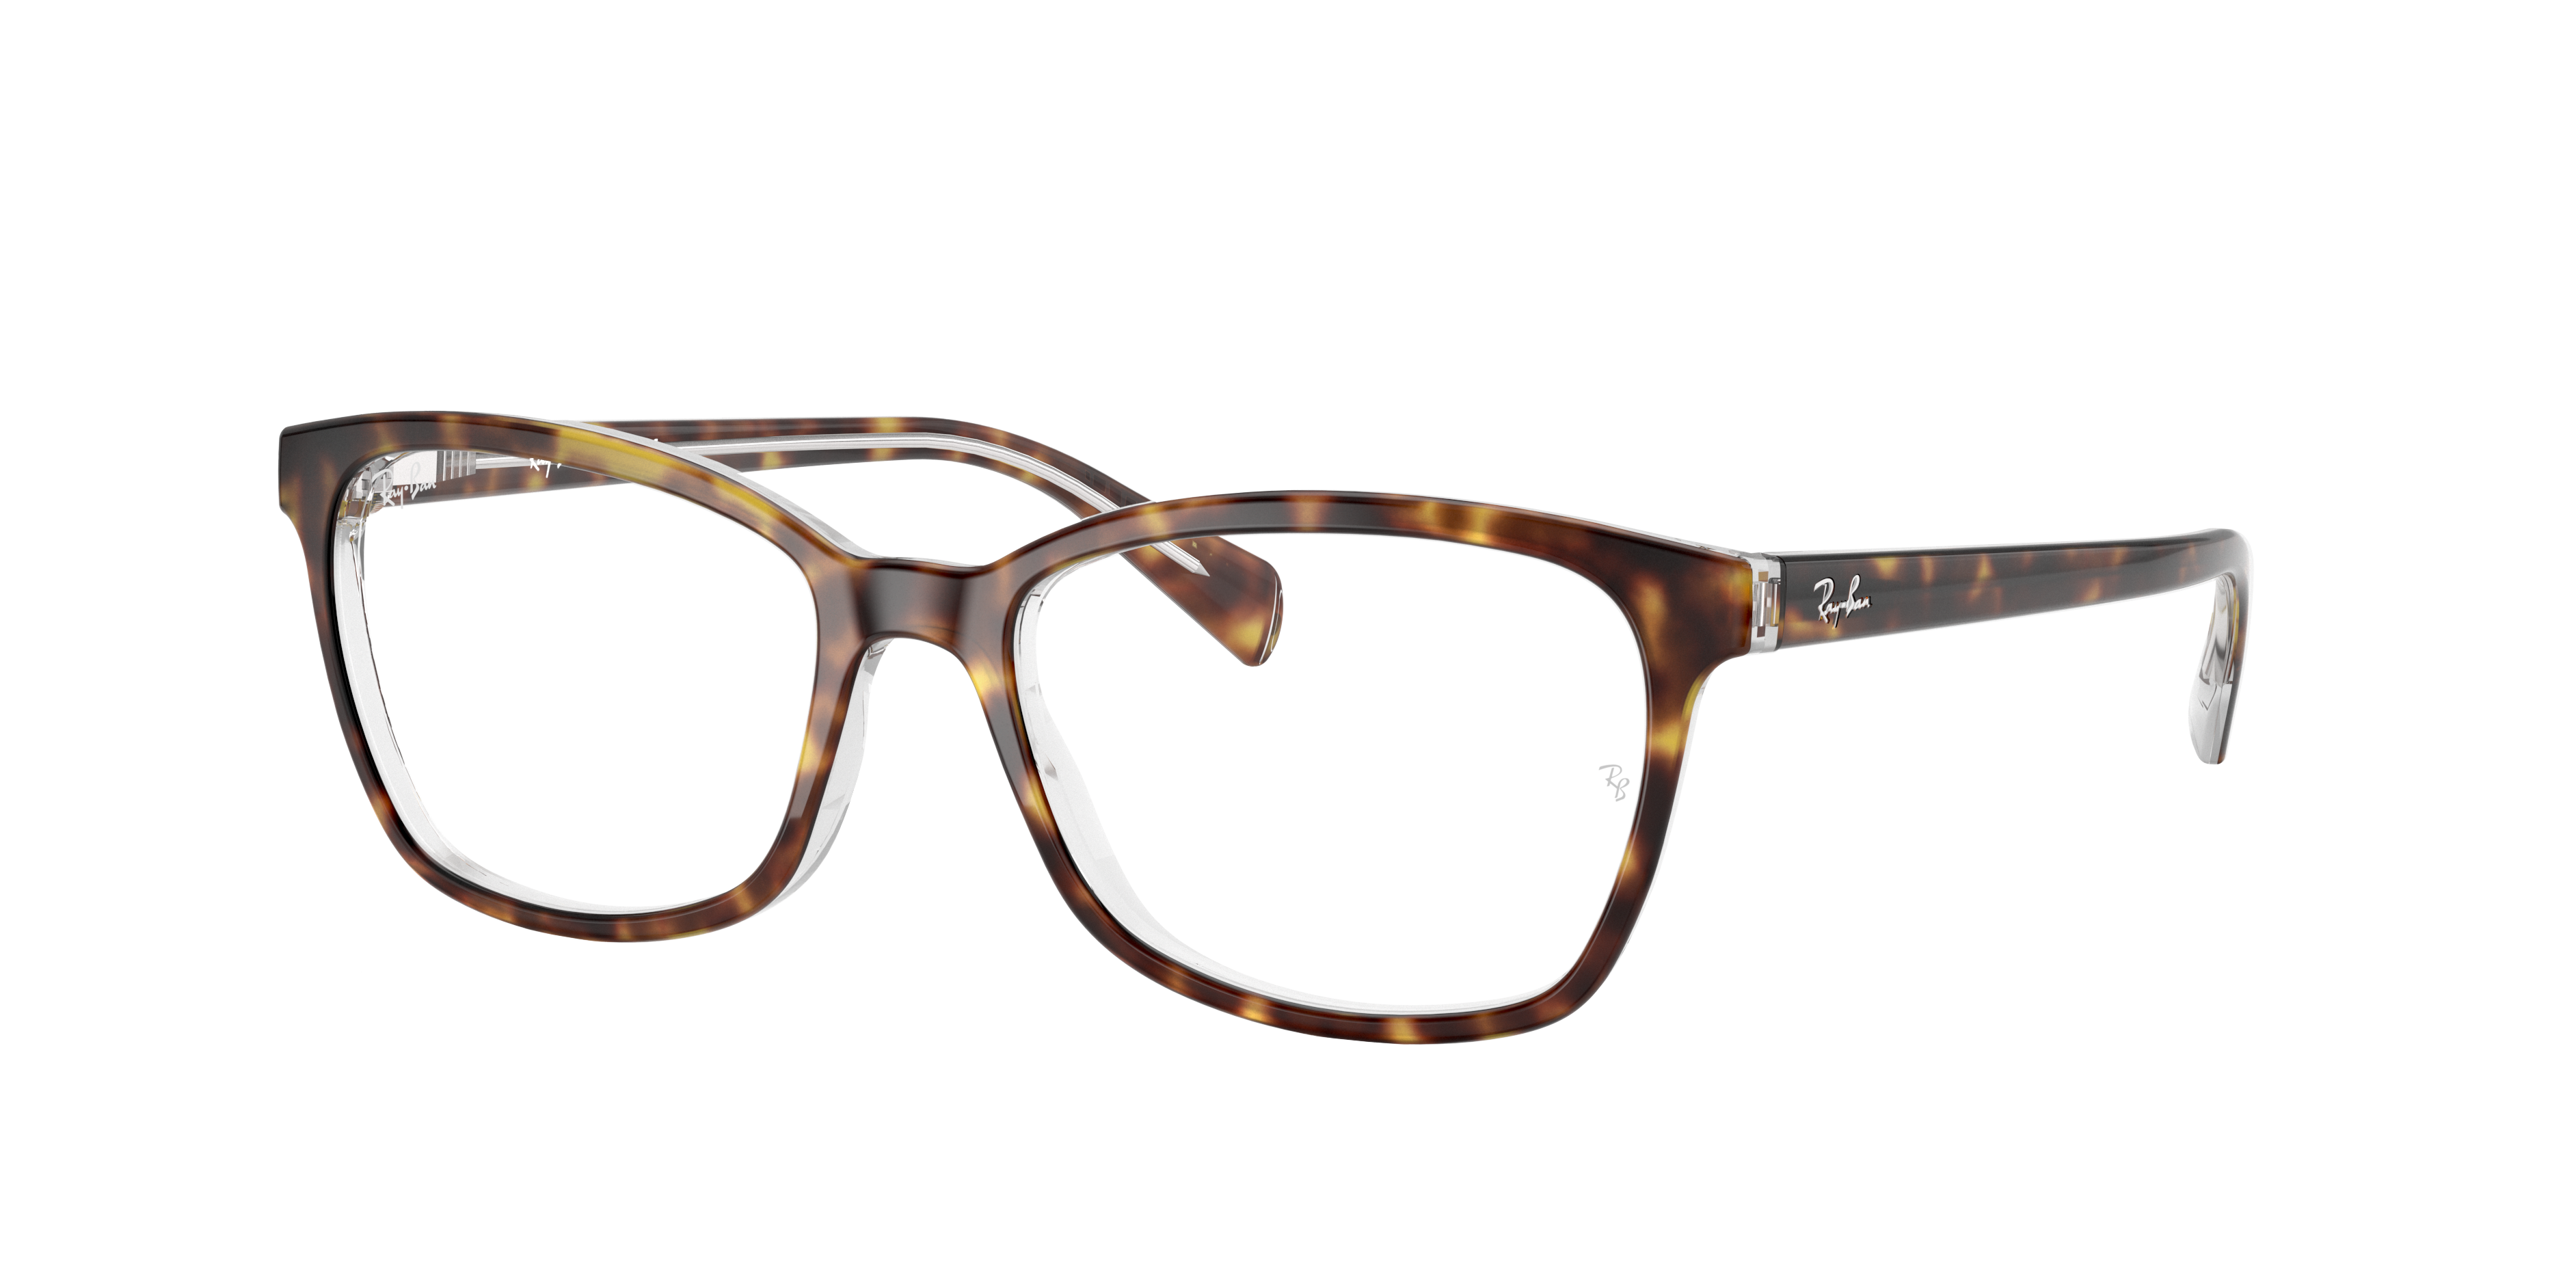 Rb5362 Optics Eyeglasses with Havana On Transparent Frame | Ray-Ban®